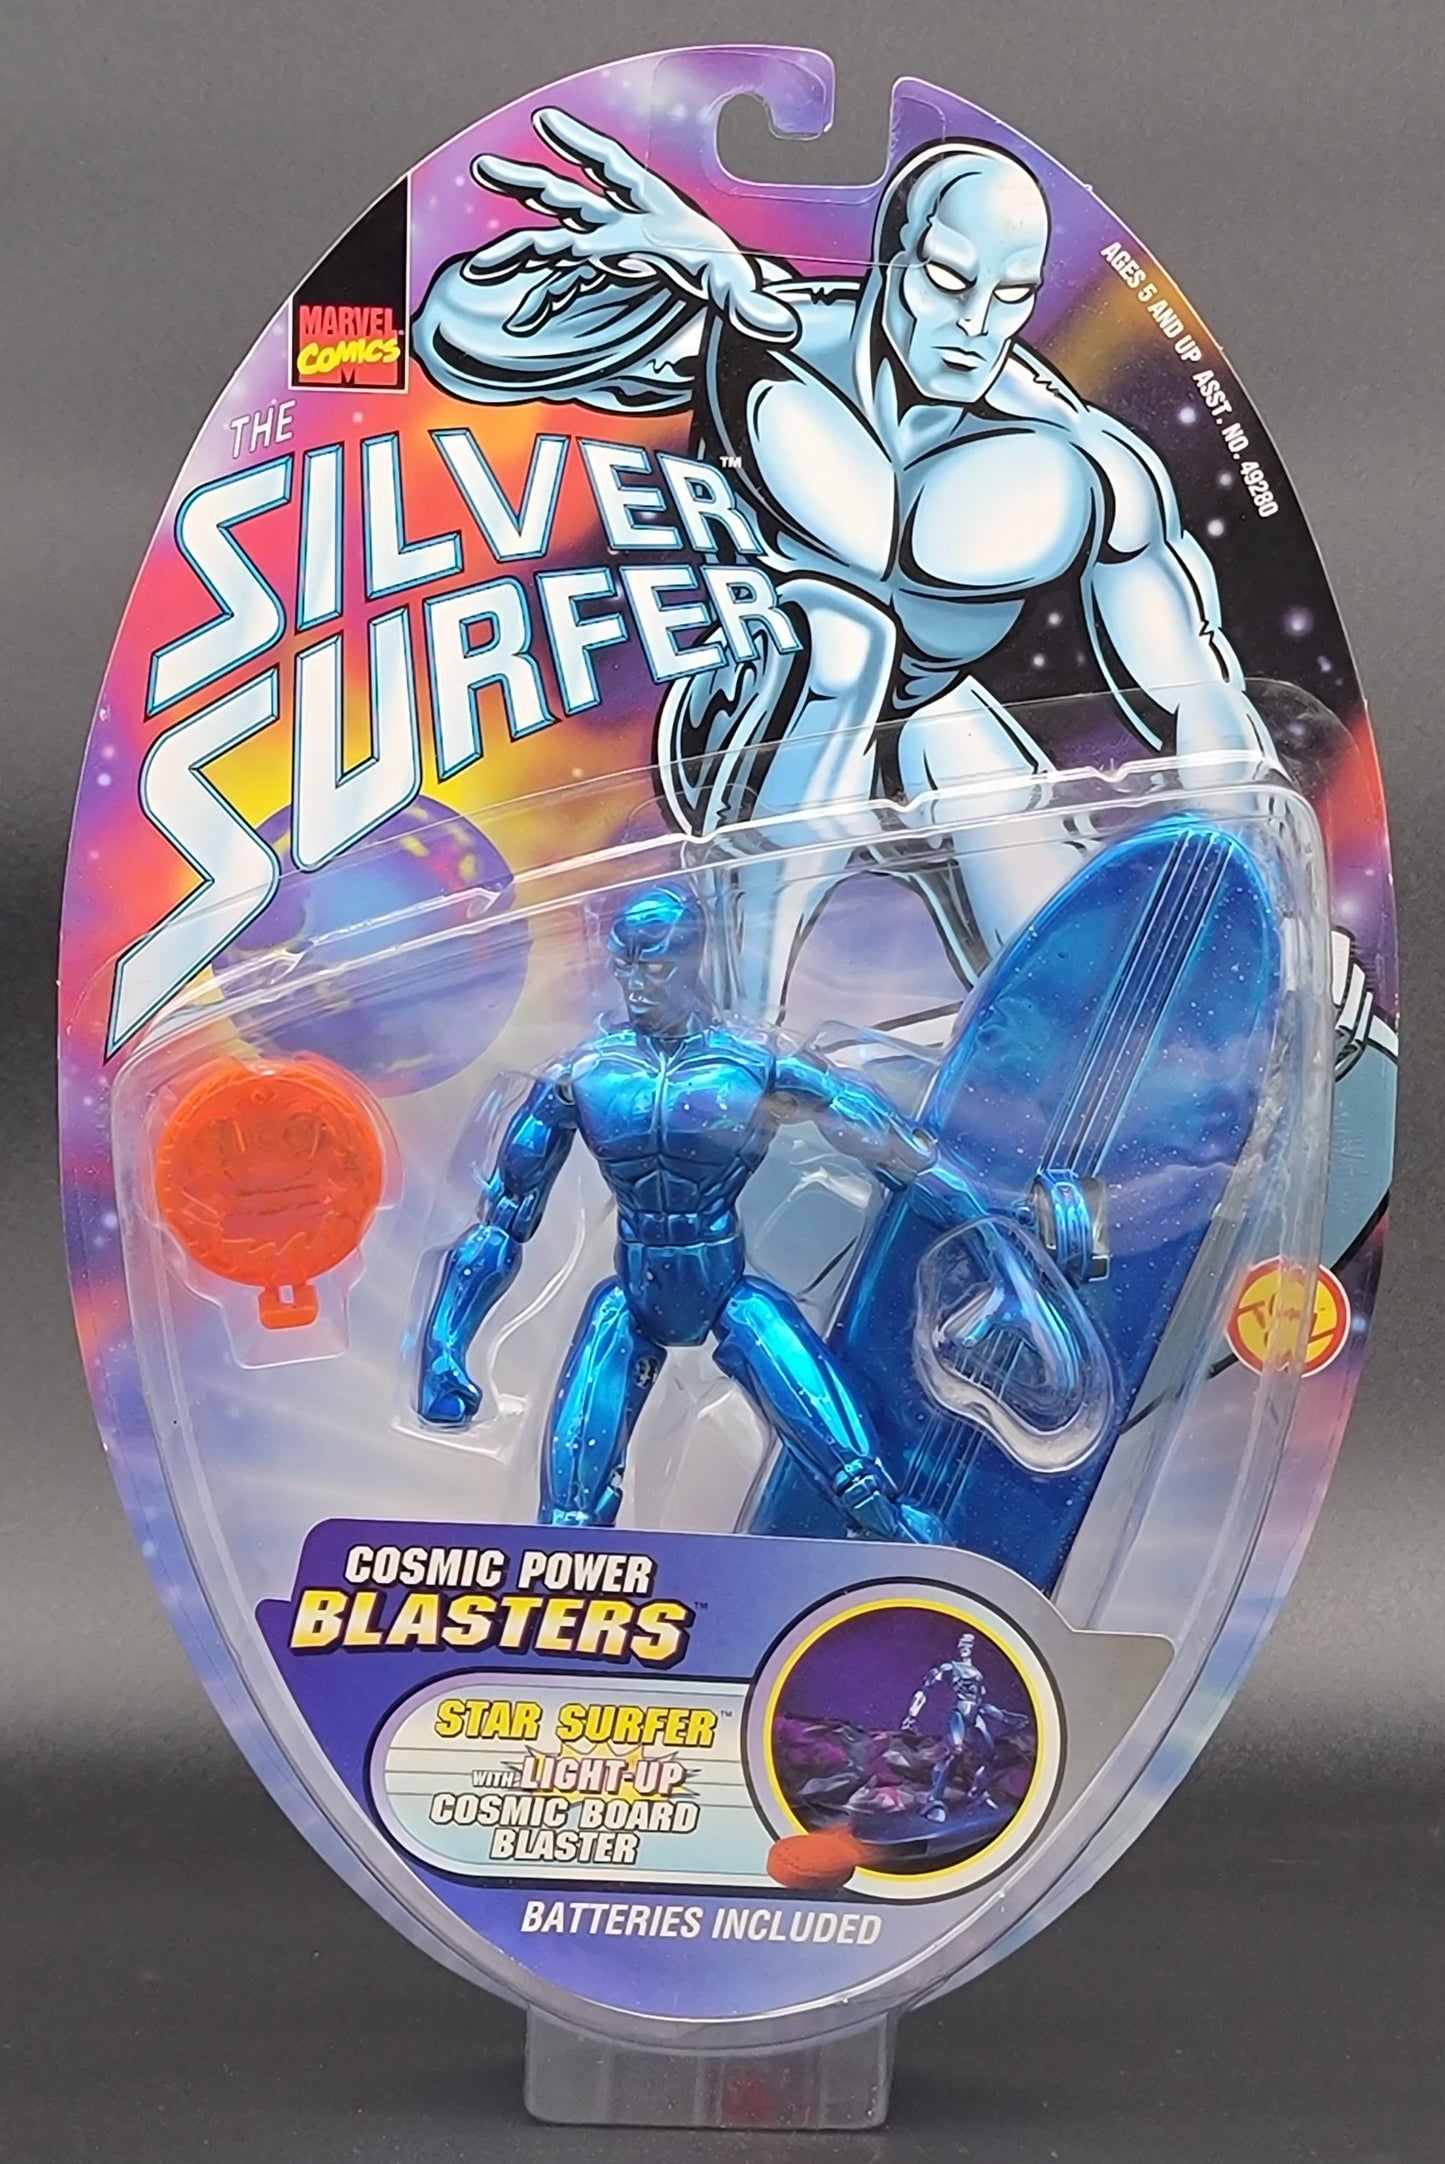 Silver Surfer star surfer